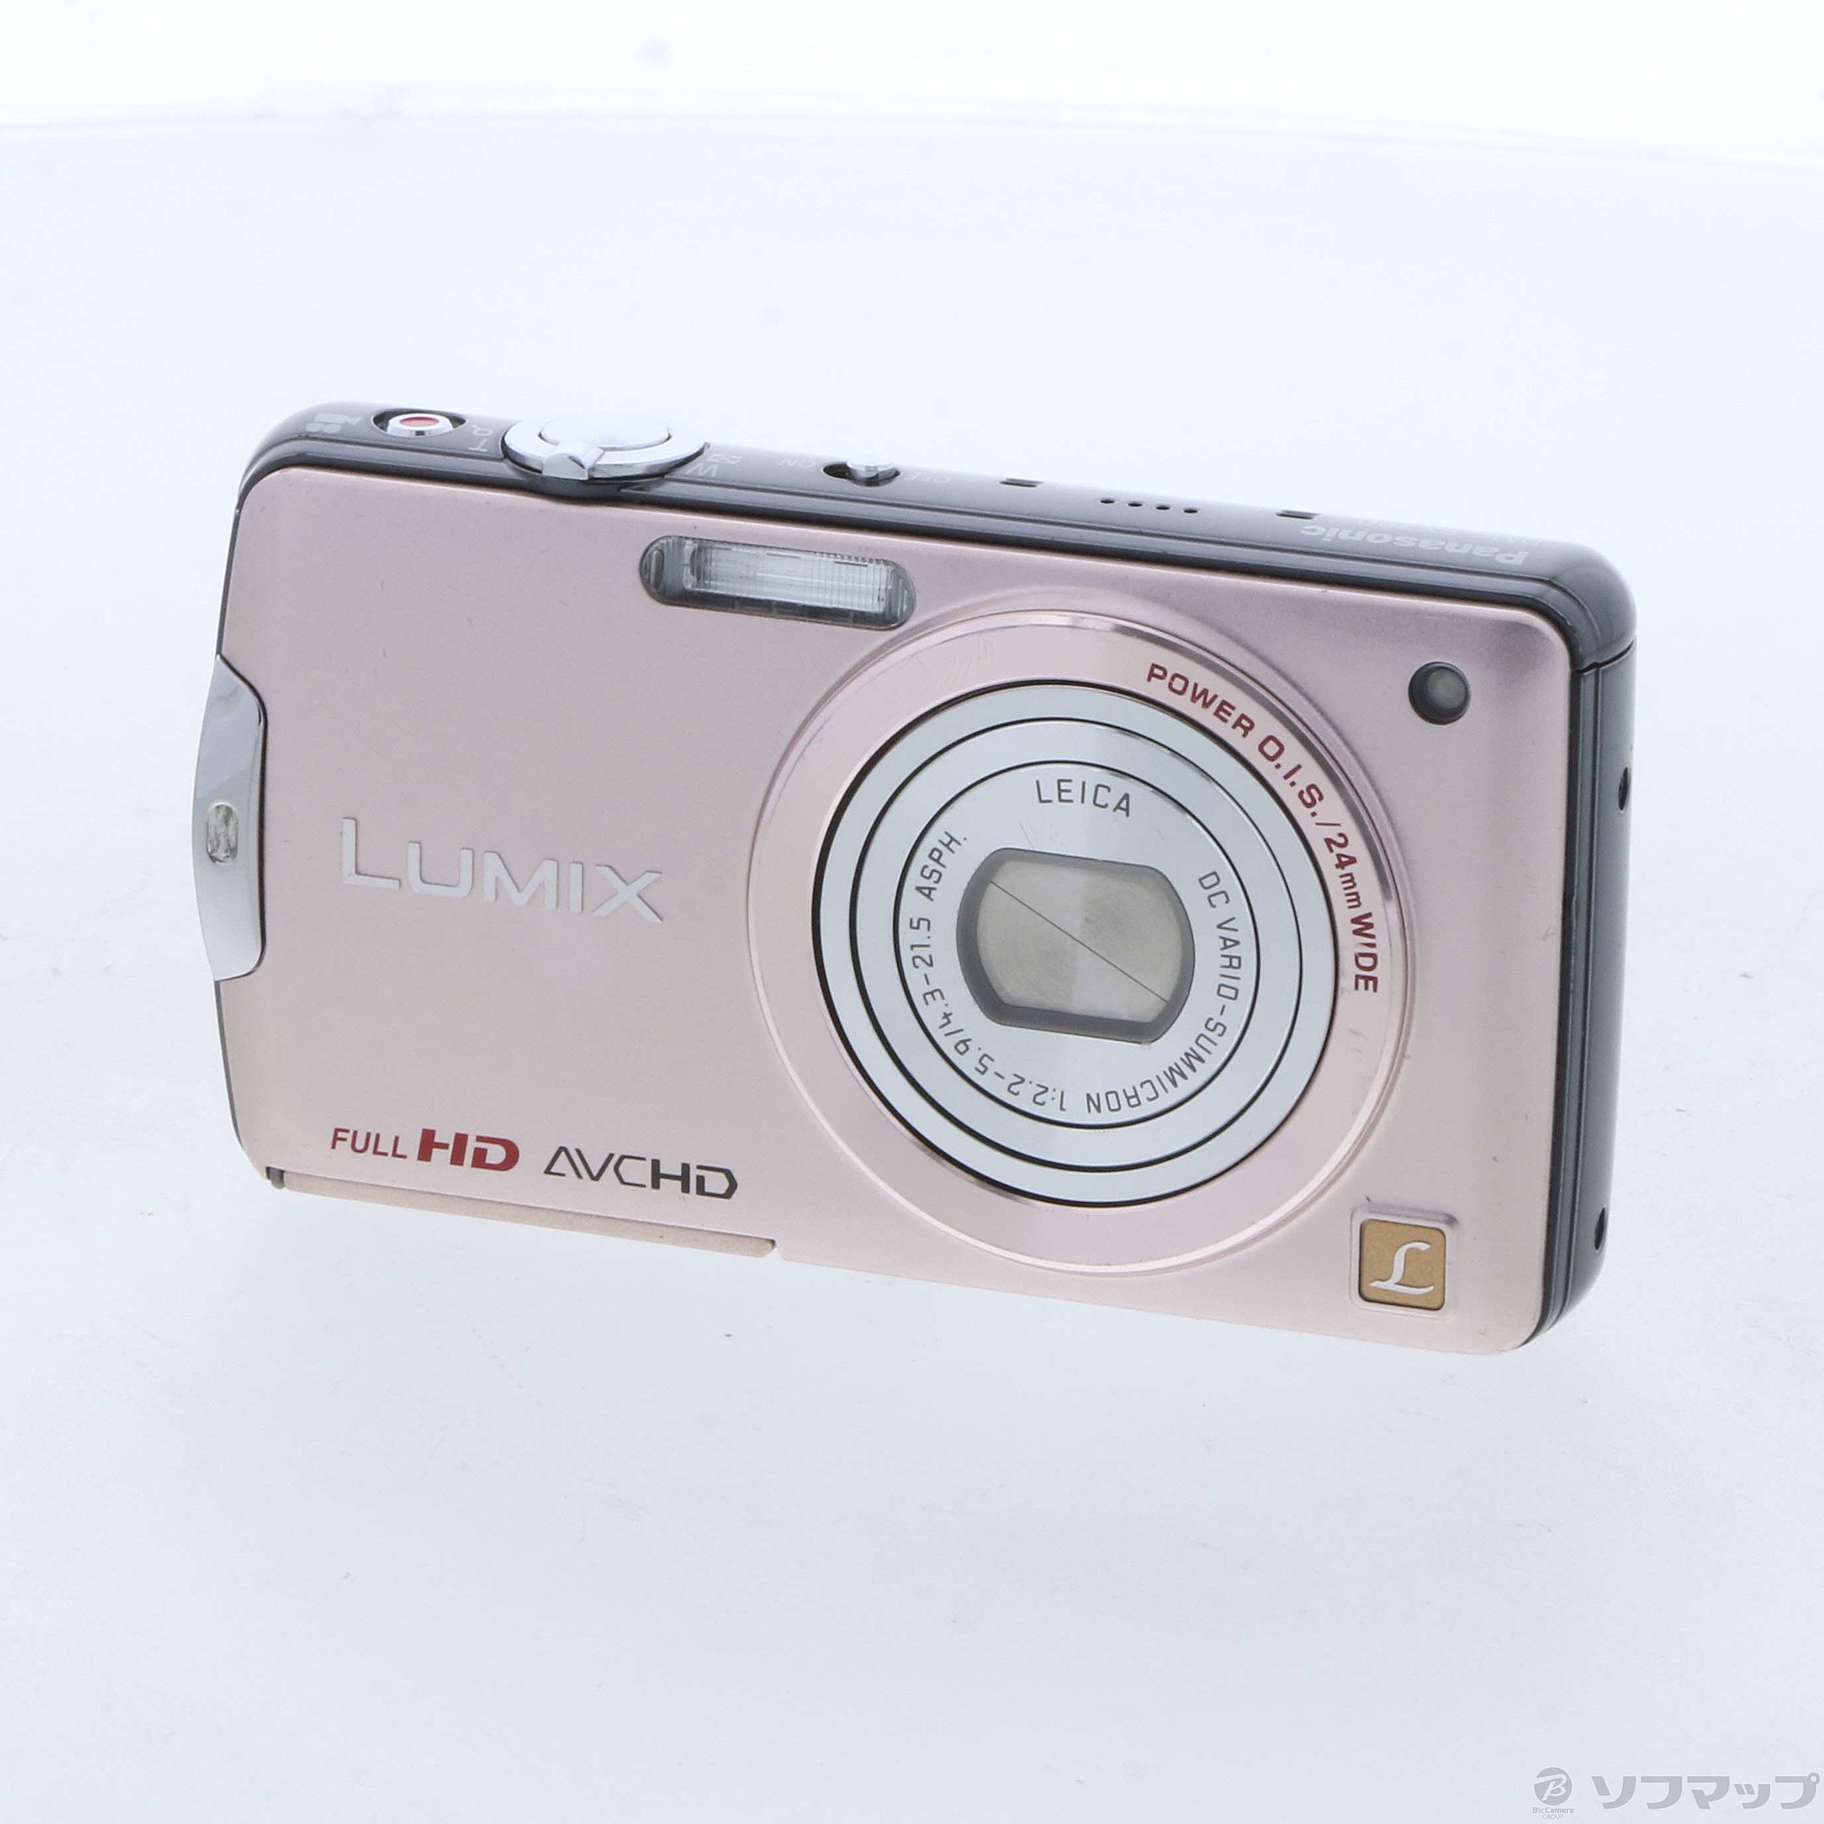 LUMIXPanasonic デジタルカメラ LUMIX DMC-FX700 - デジタルカメラ